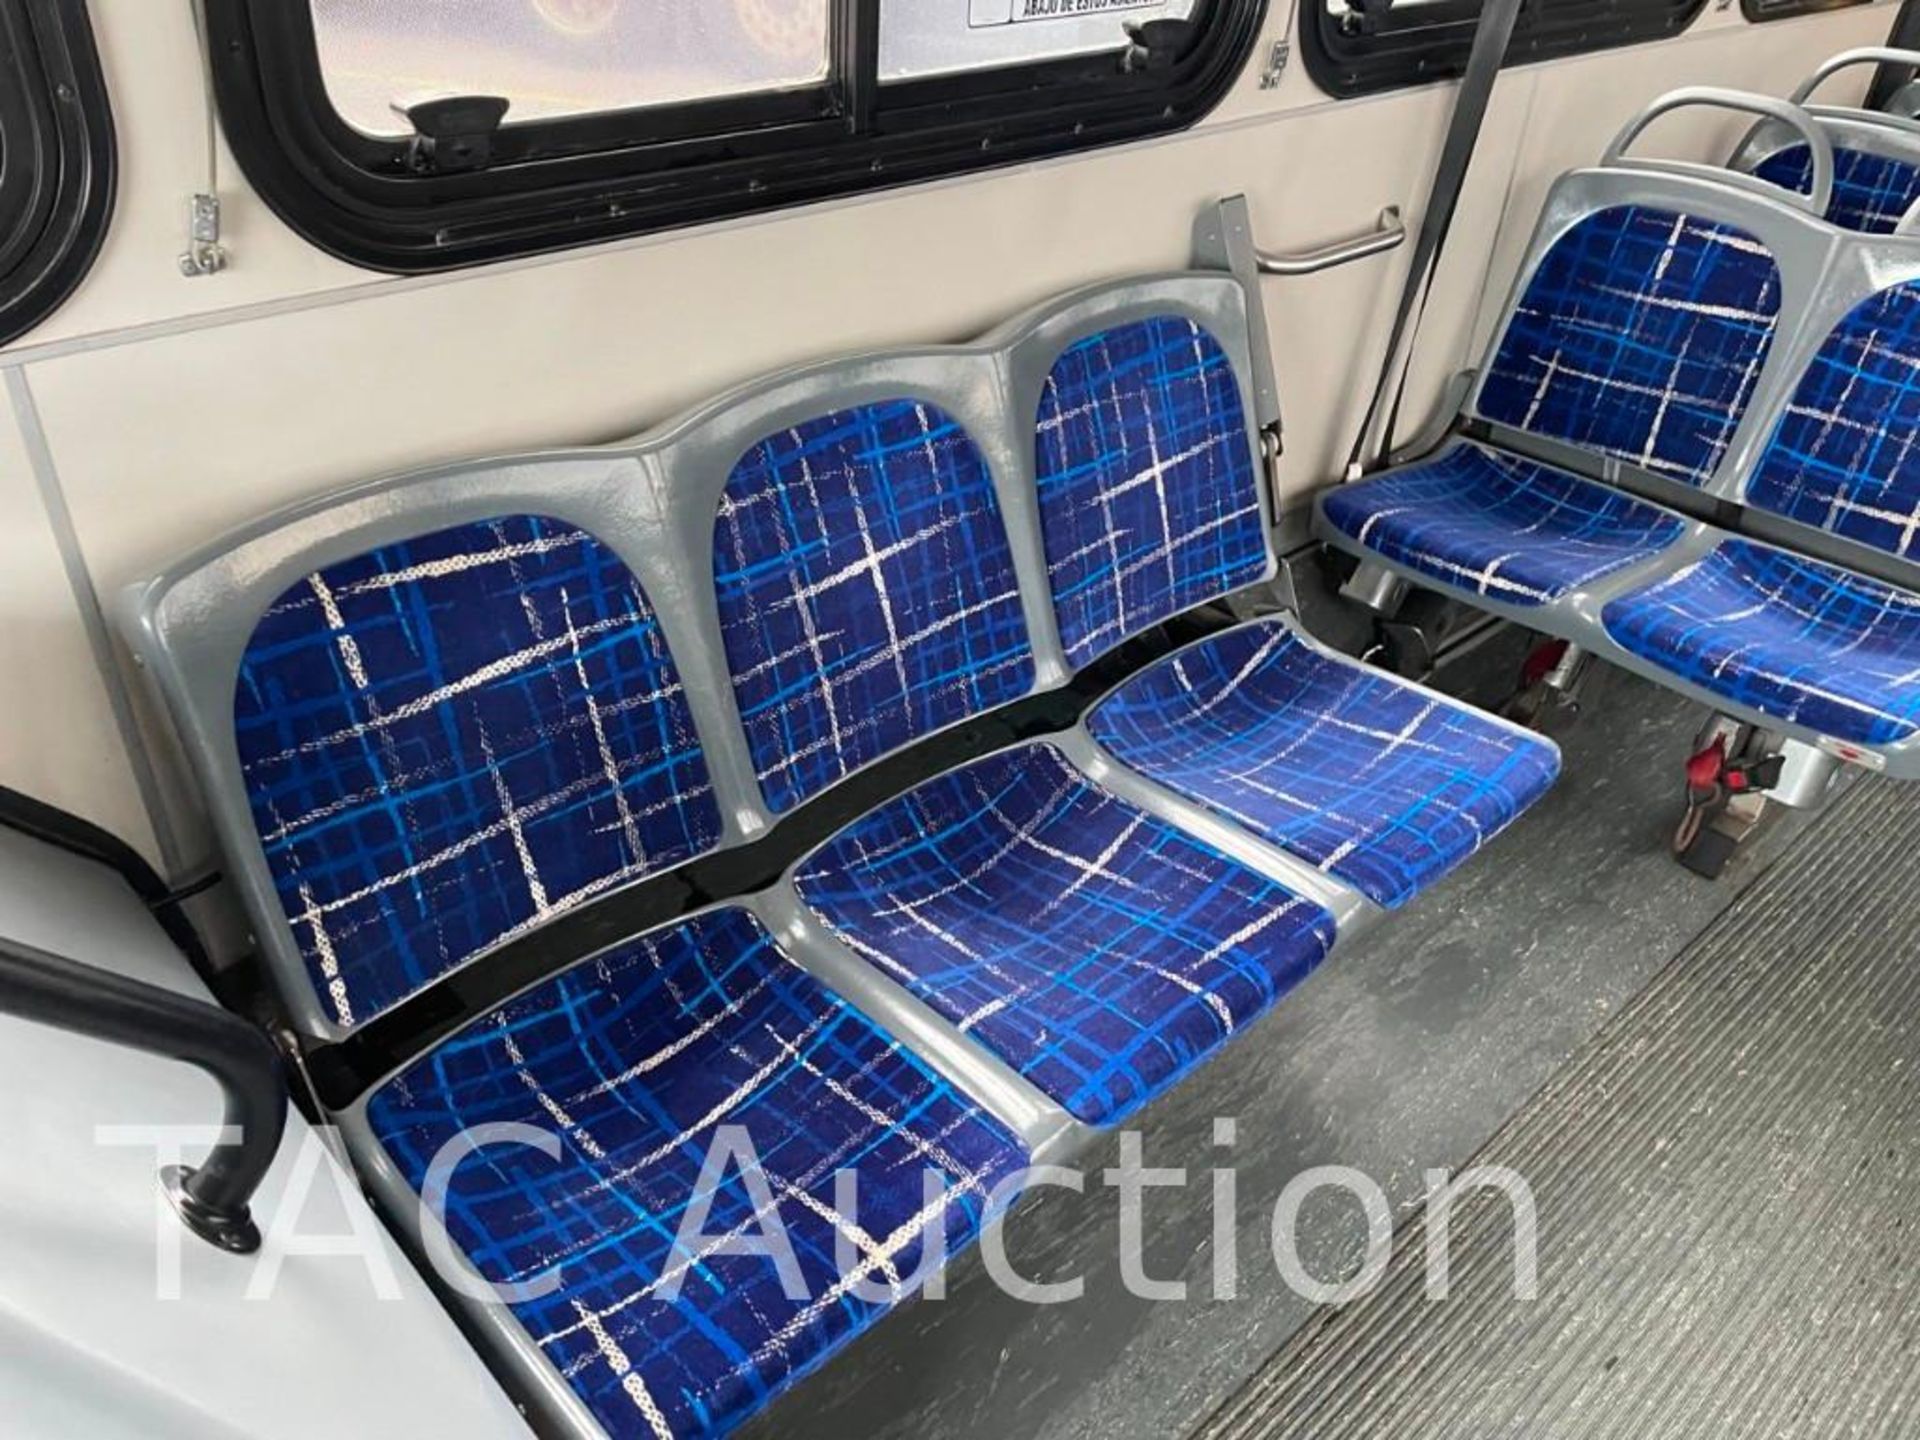 2005 Gillig Low Floor (40) Passenger Coach Transit Bus - Image 51 of 91